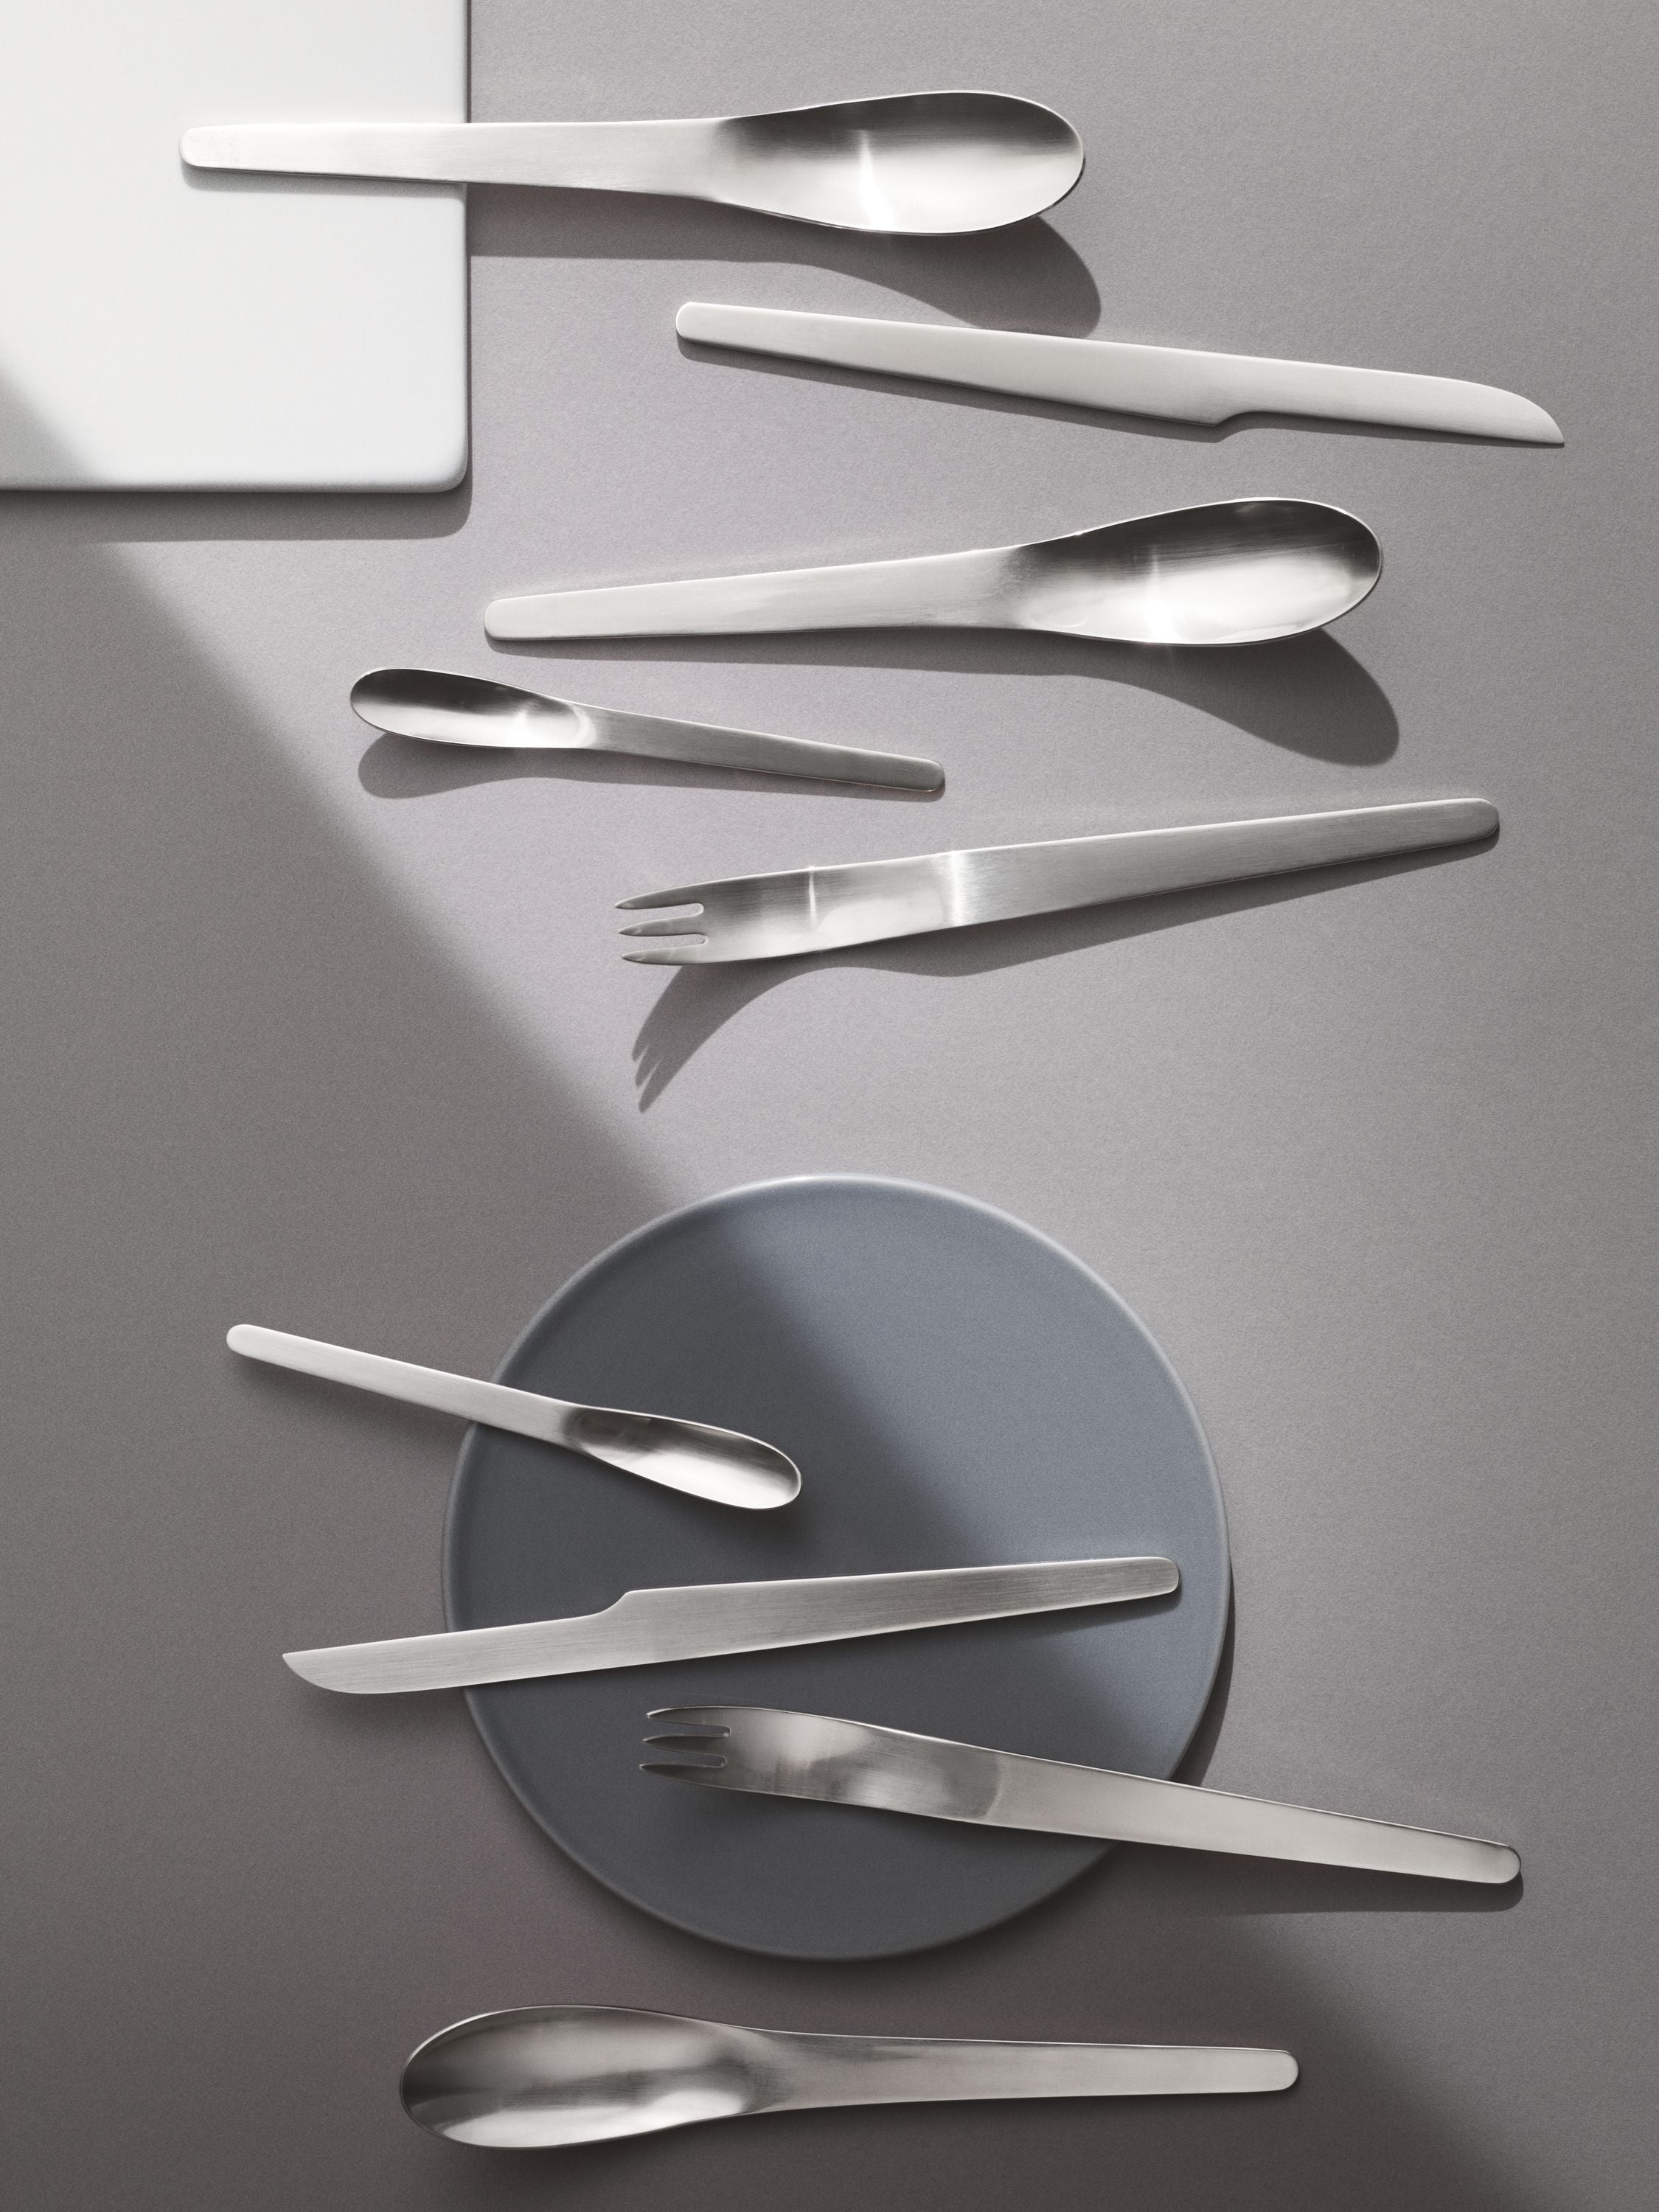 Georg Jensen Arne Jacobsen Cutlery, 24 Piece Set